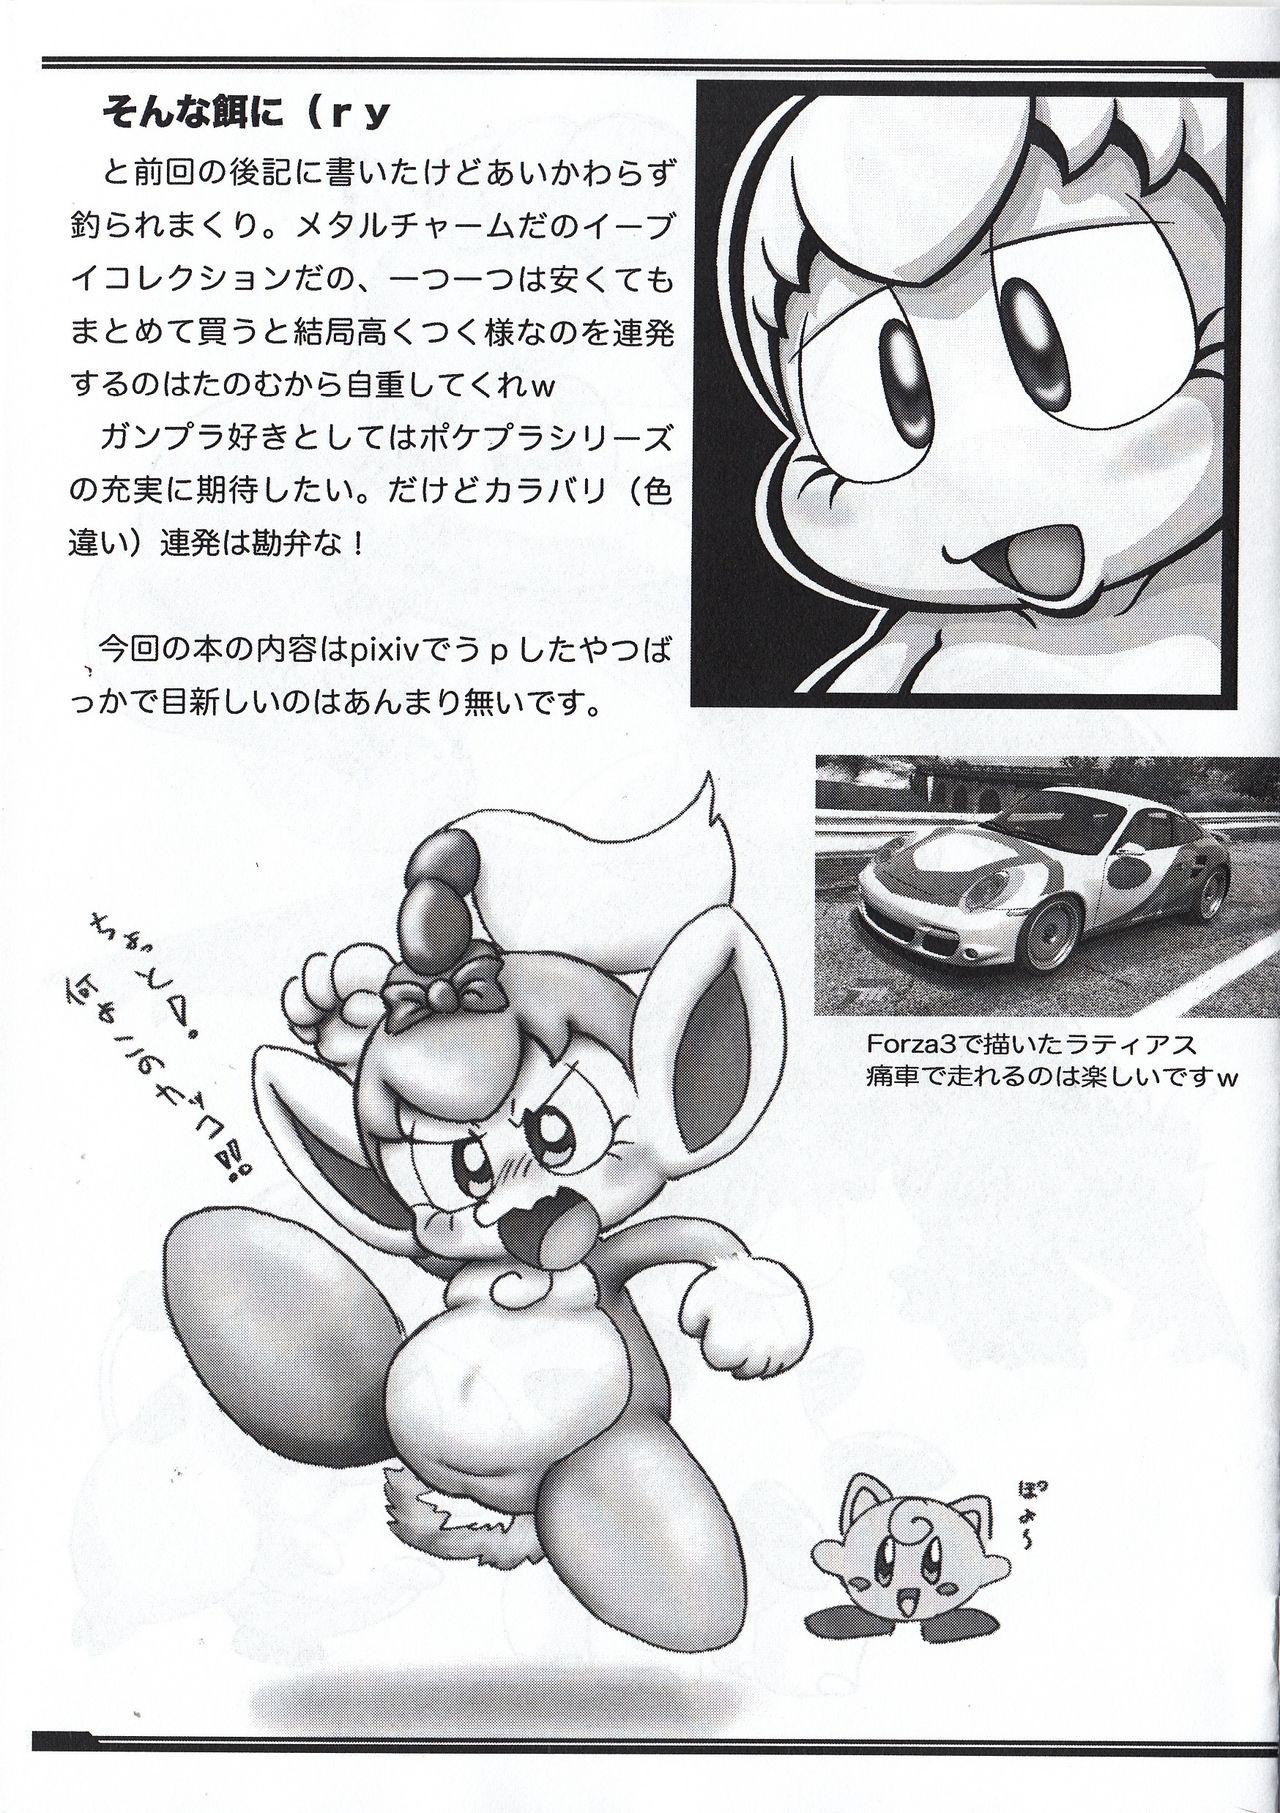 Amature Allure P-Kemo09 - Pokemon Kirby Animal crossing Punk - Page 2